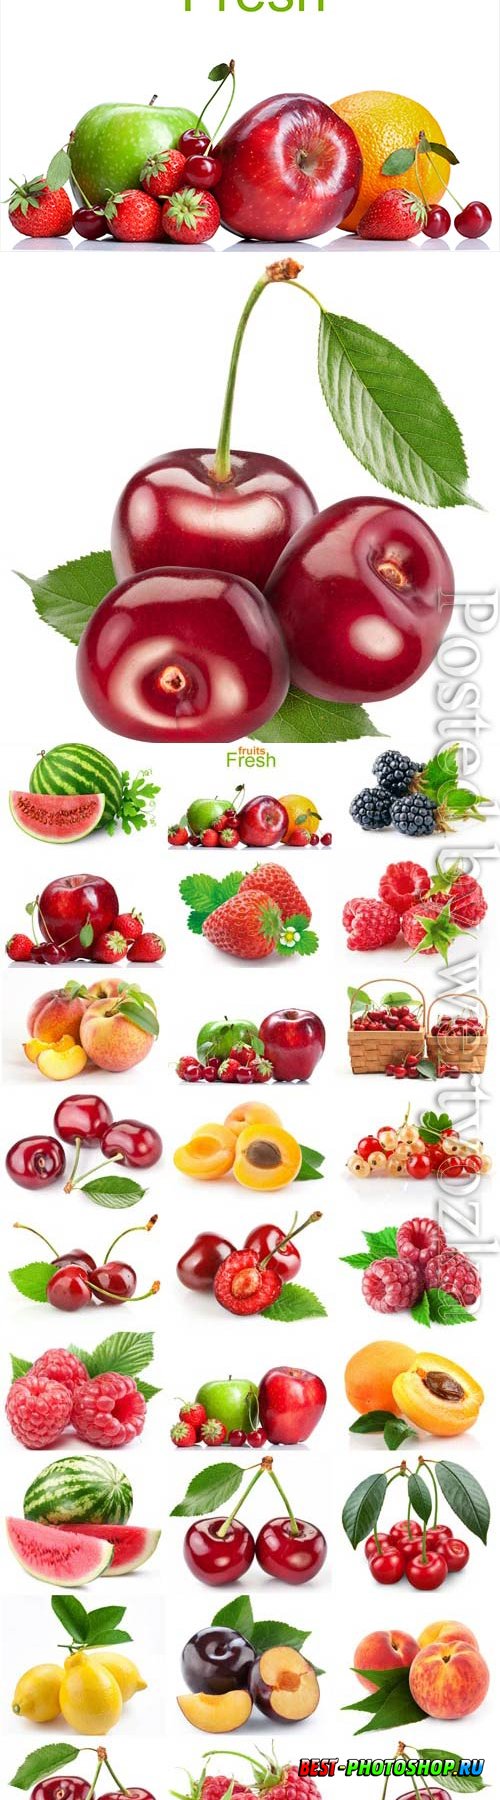 Fresh fruits and berries stock photo